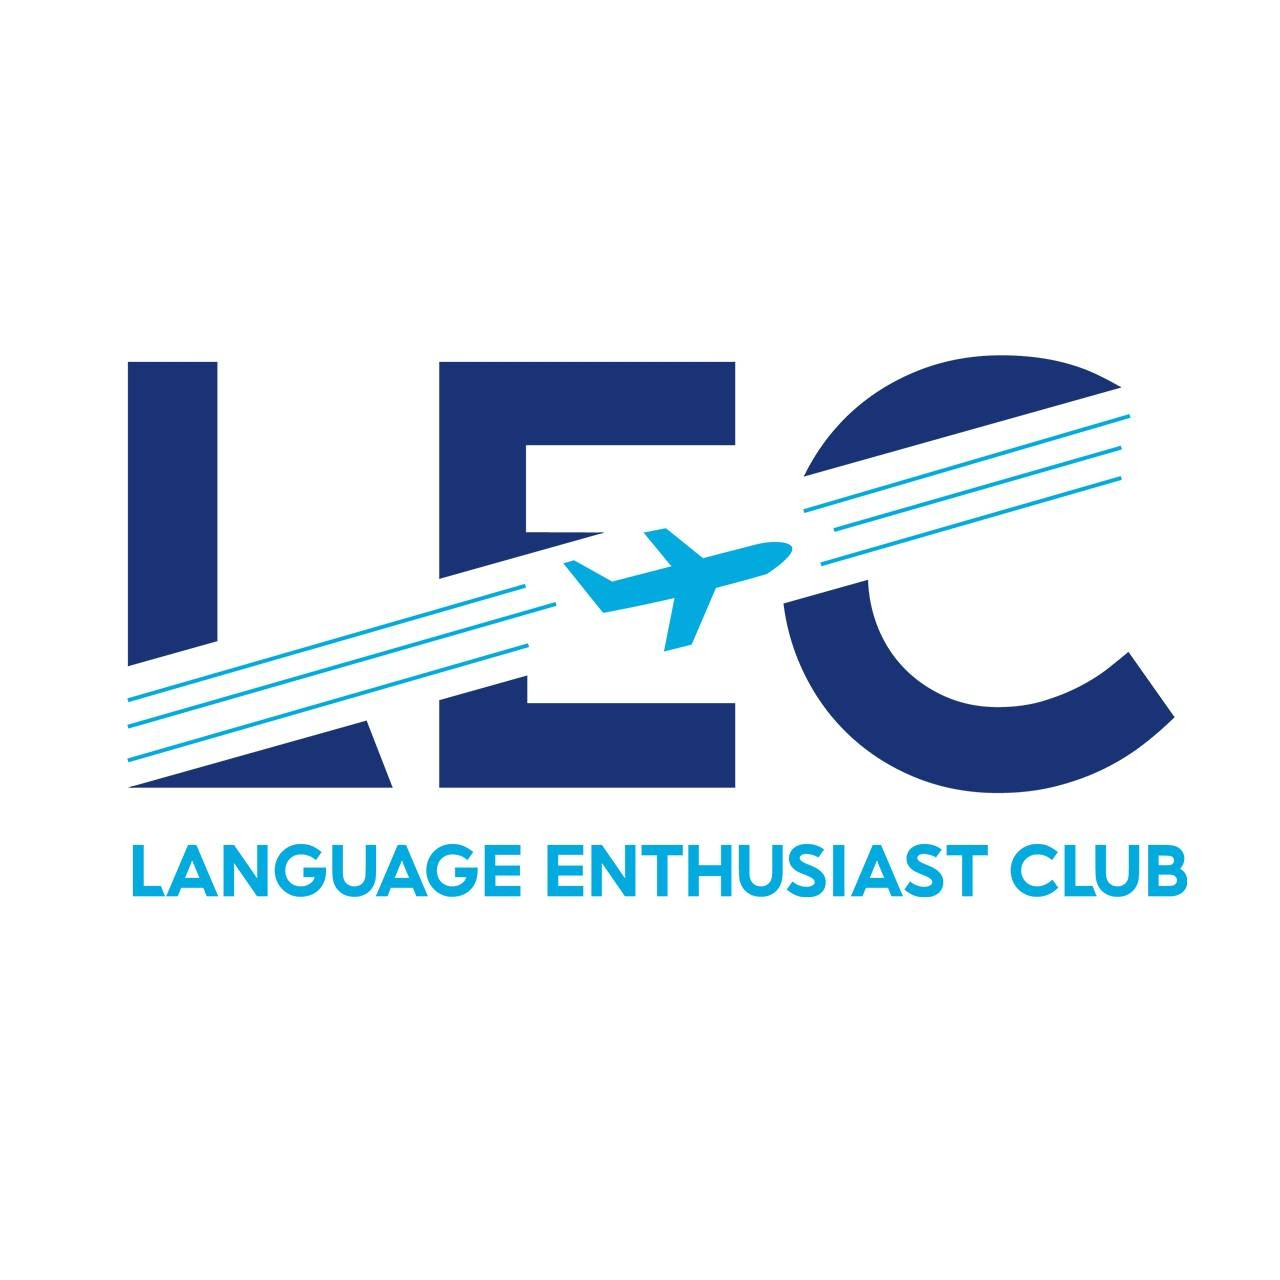 NEW LOGO - A BREAKTHROUGH OF LANGUAGE ENTHUSIAST CLUB